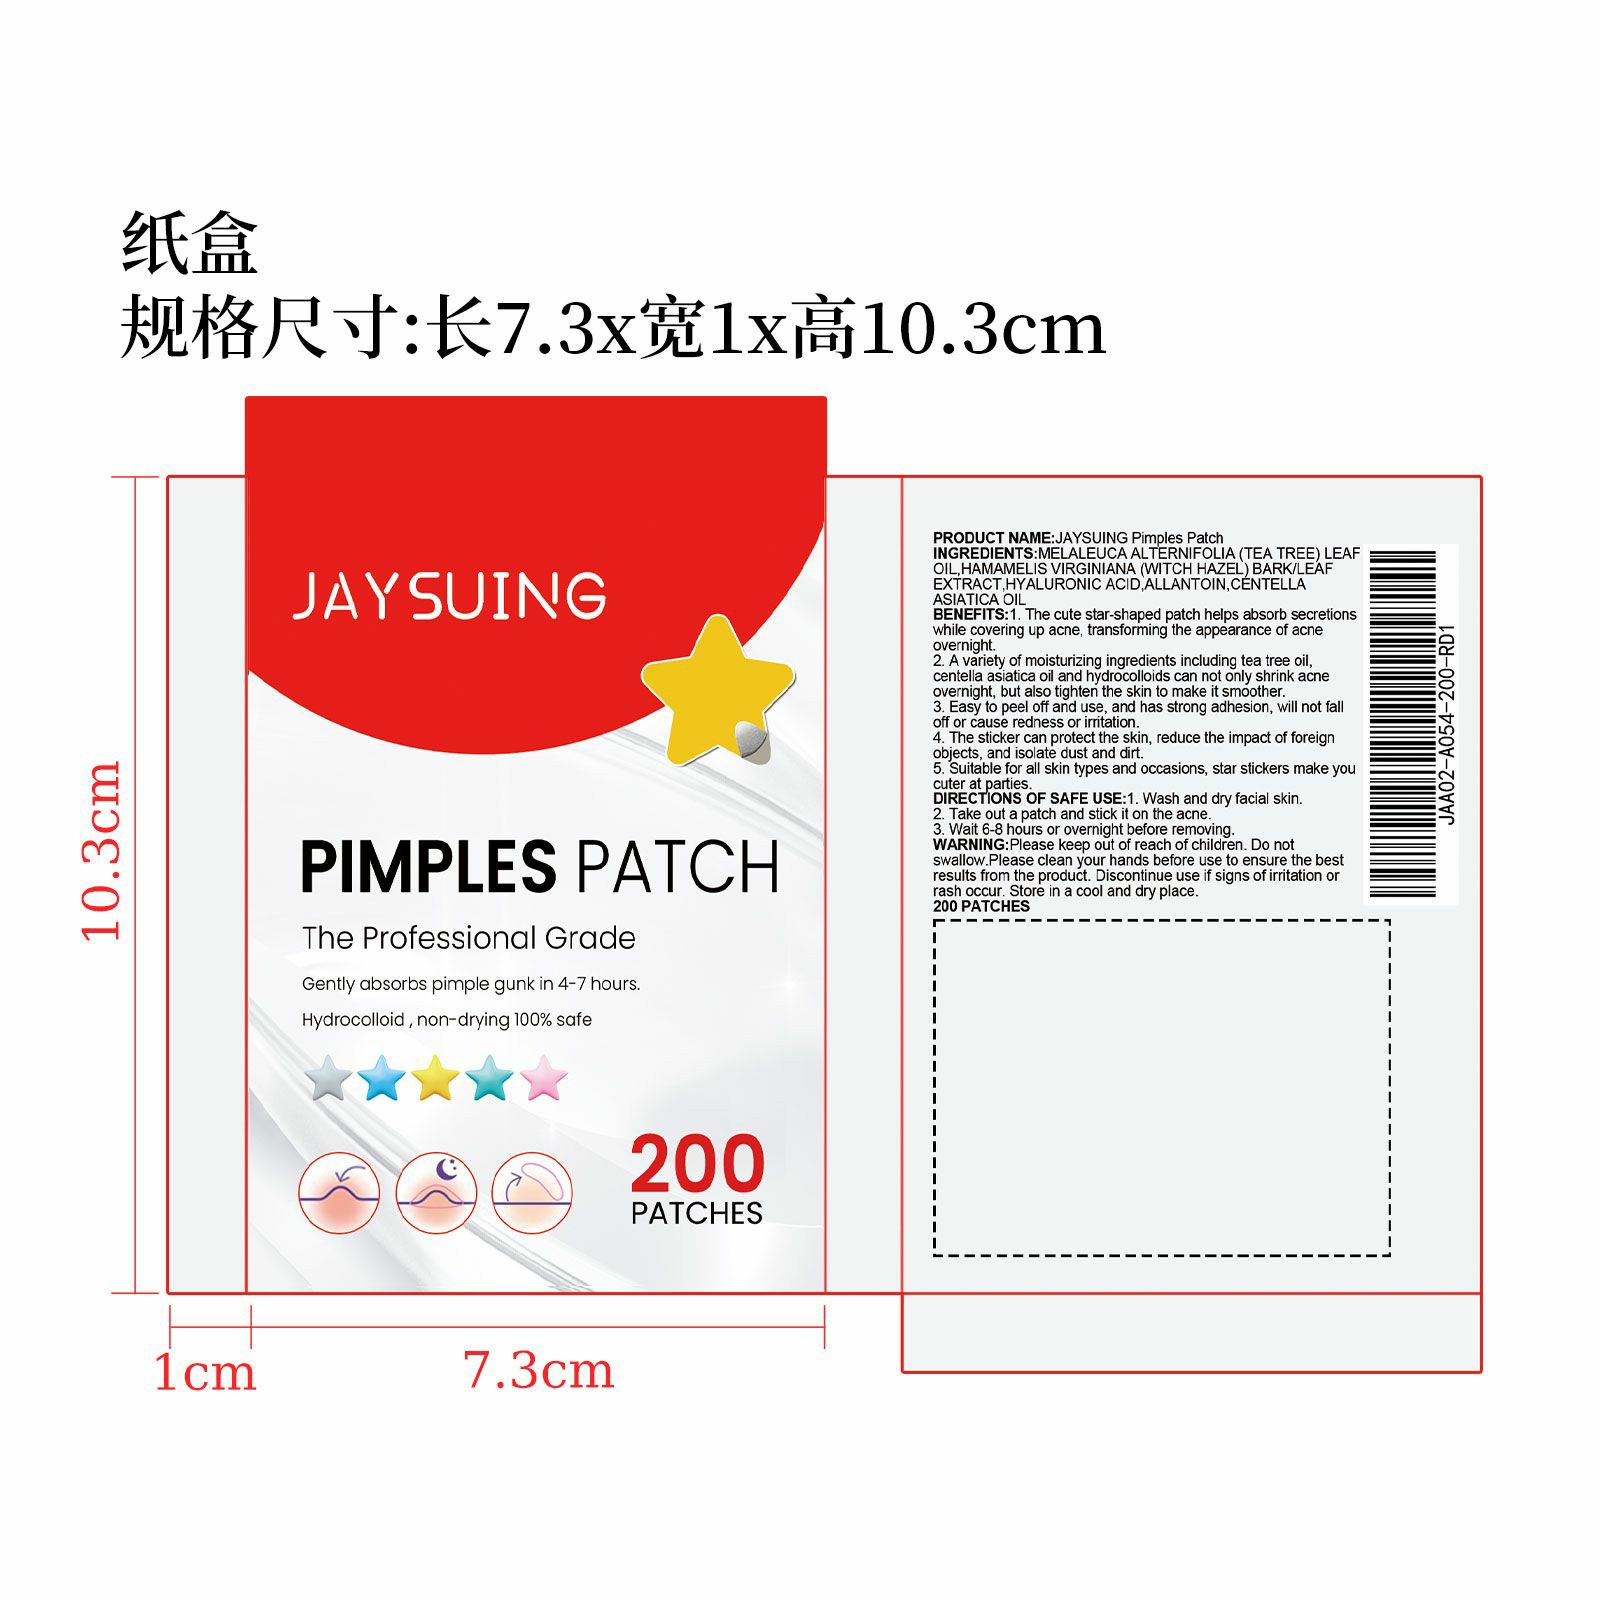 JAYSUING Pimples Patch